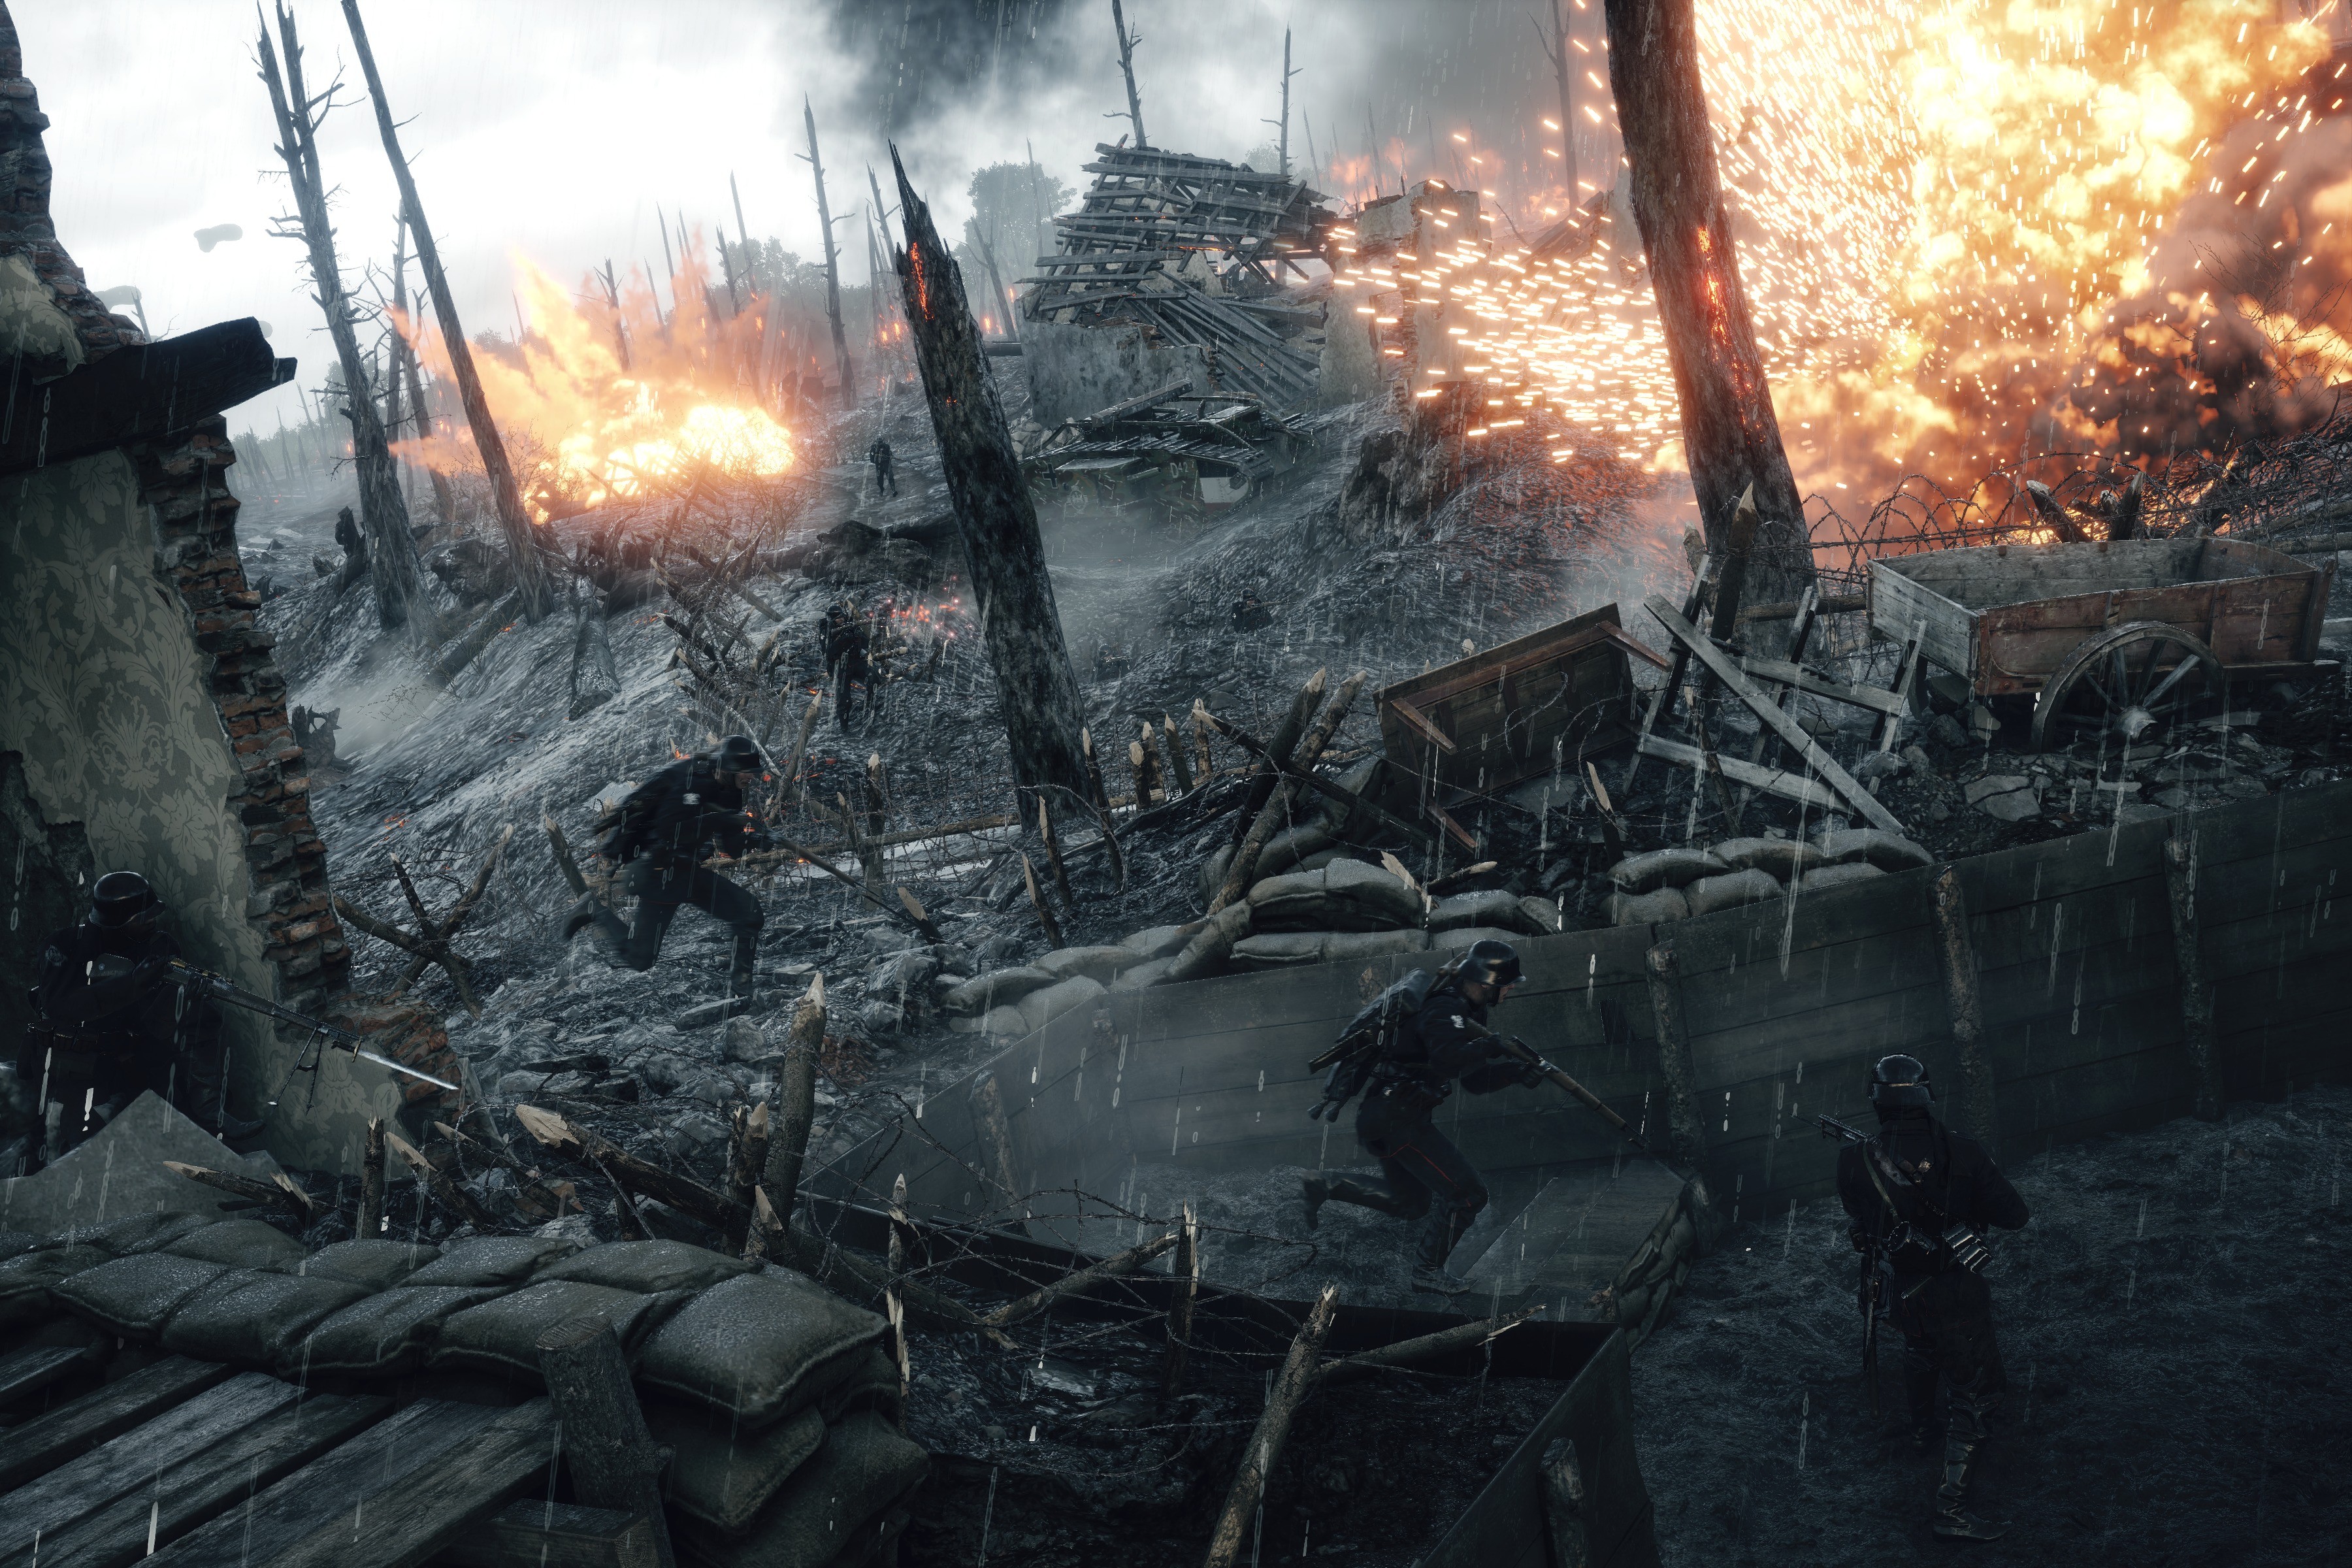 Battlefield 1 EA DiCE World War I Soldier War Video Games 3600x2400